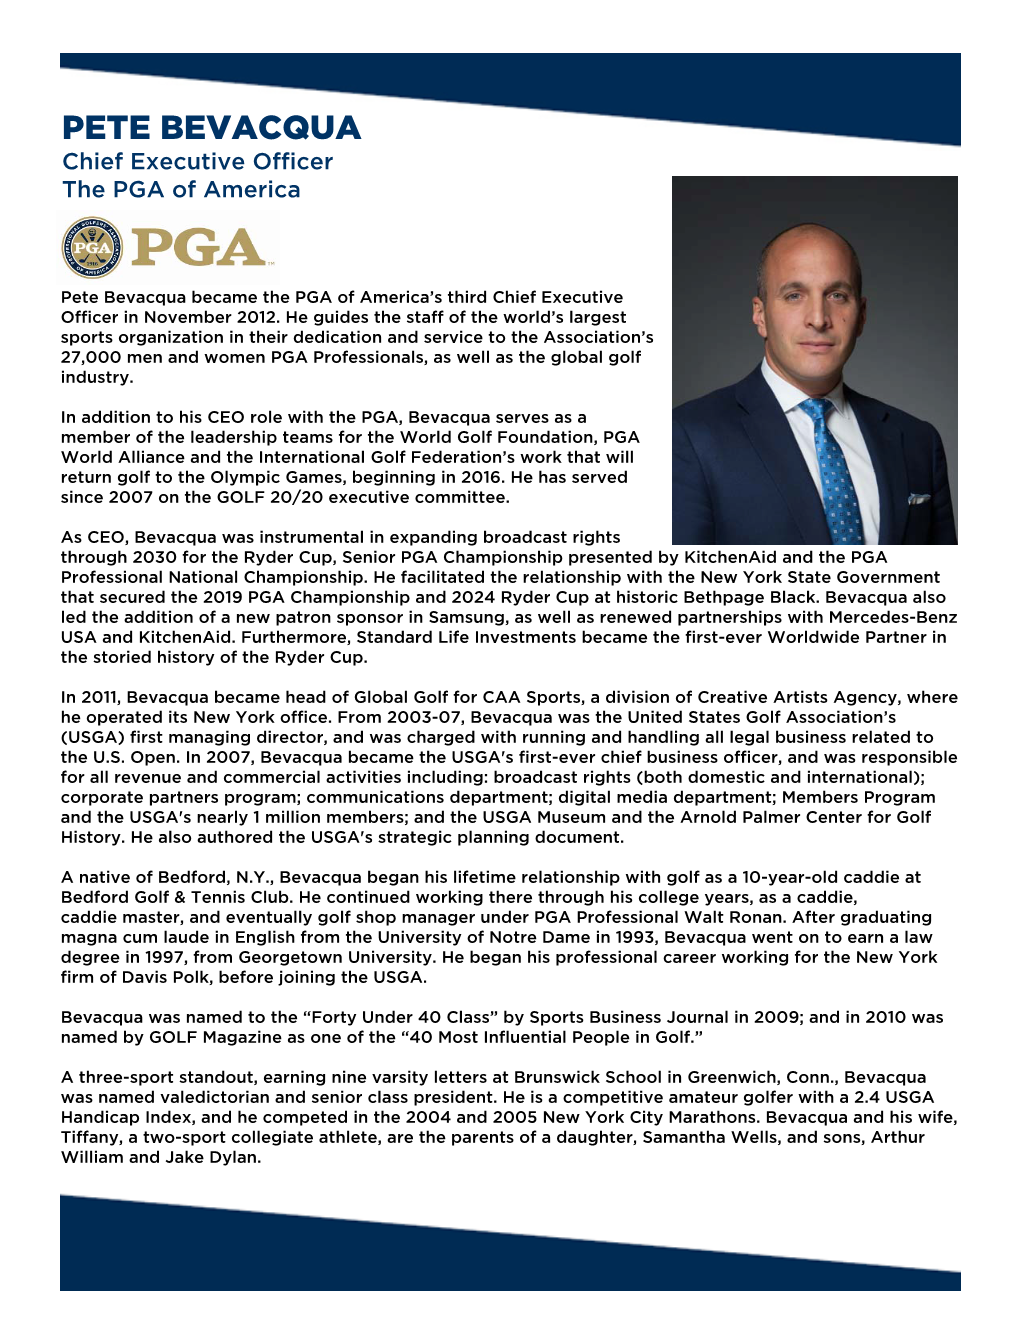 PETE BEVACQUA Chief Executive Officer the PGA of America